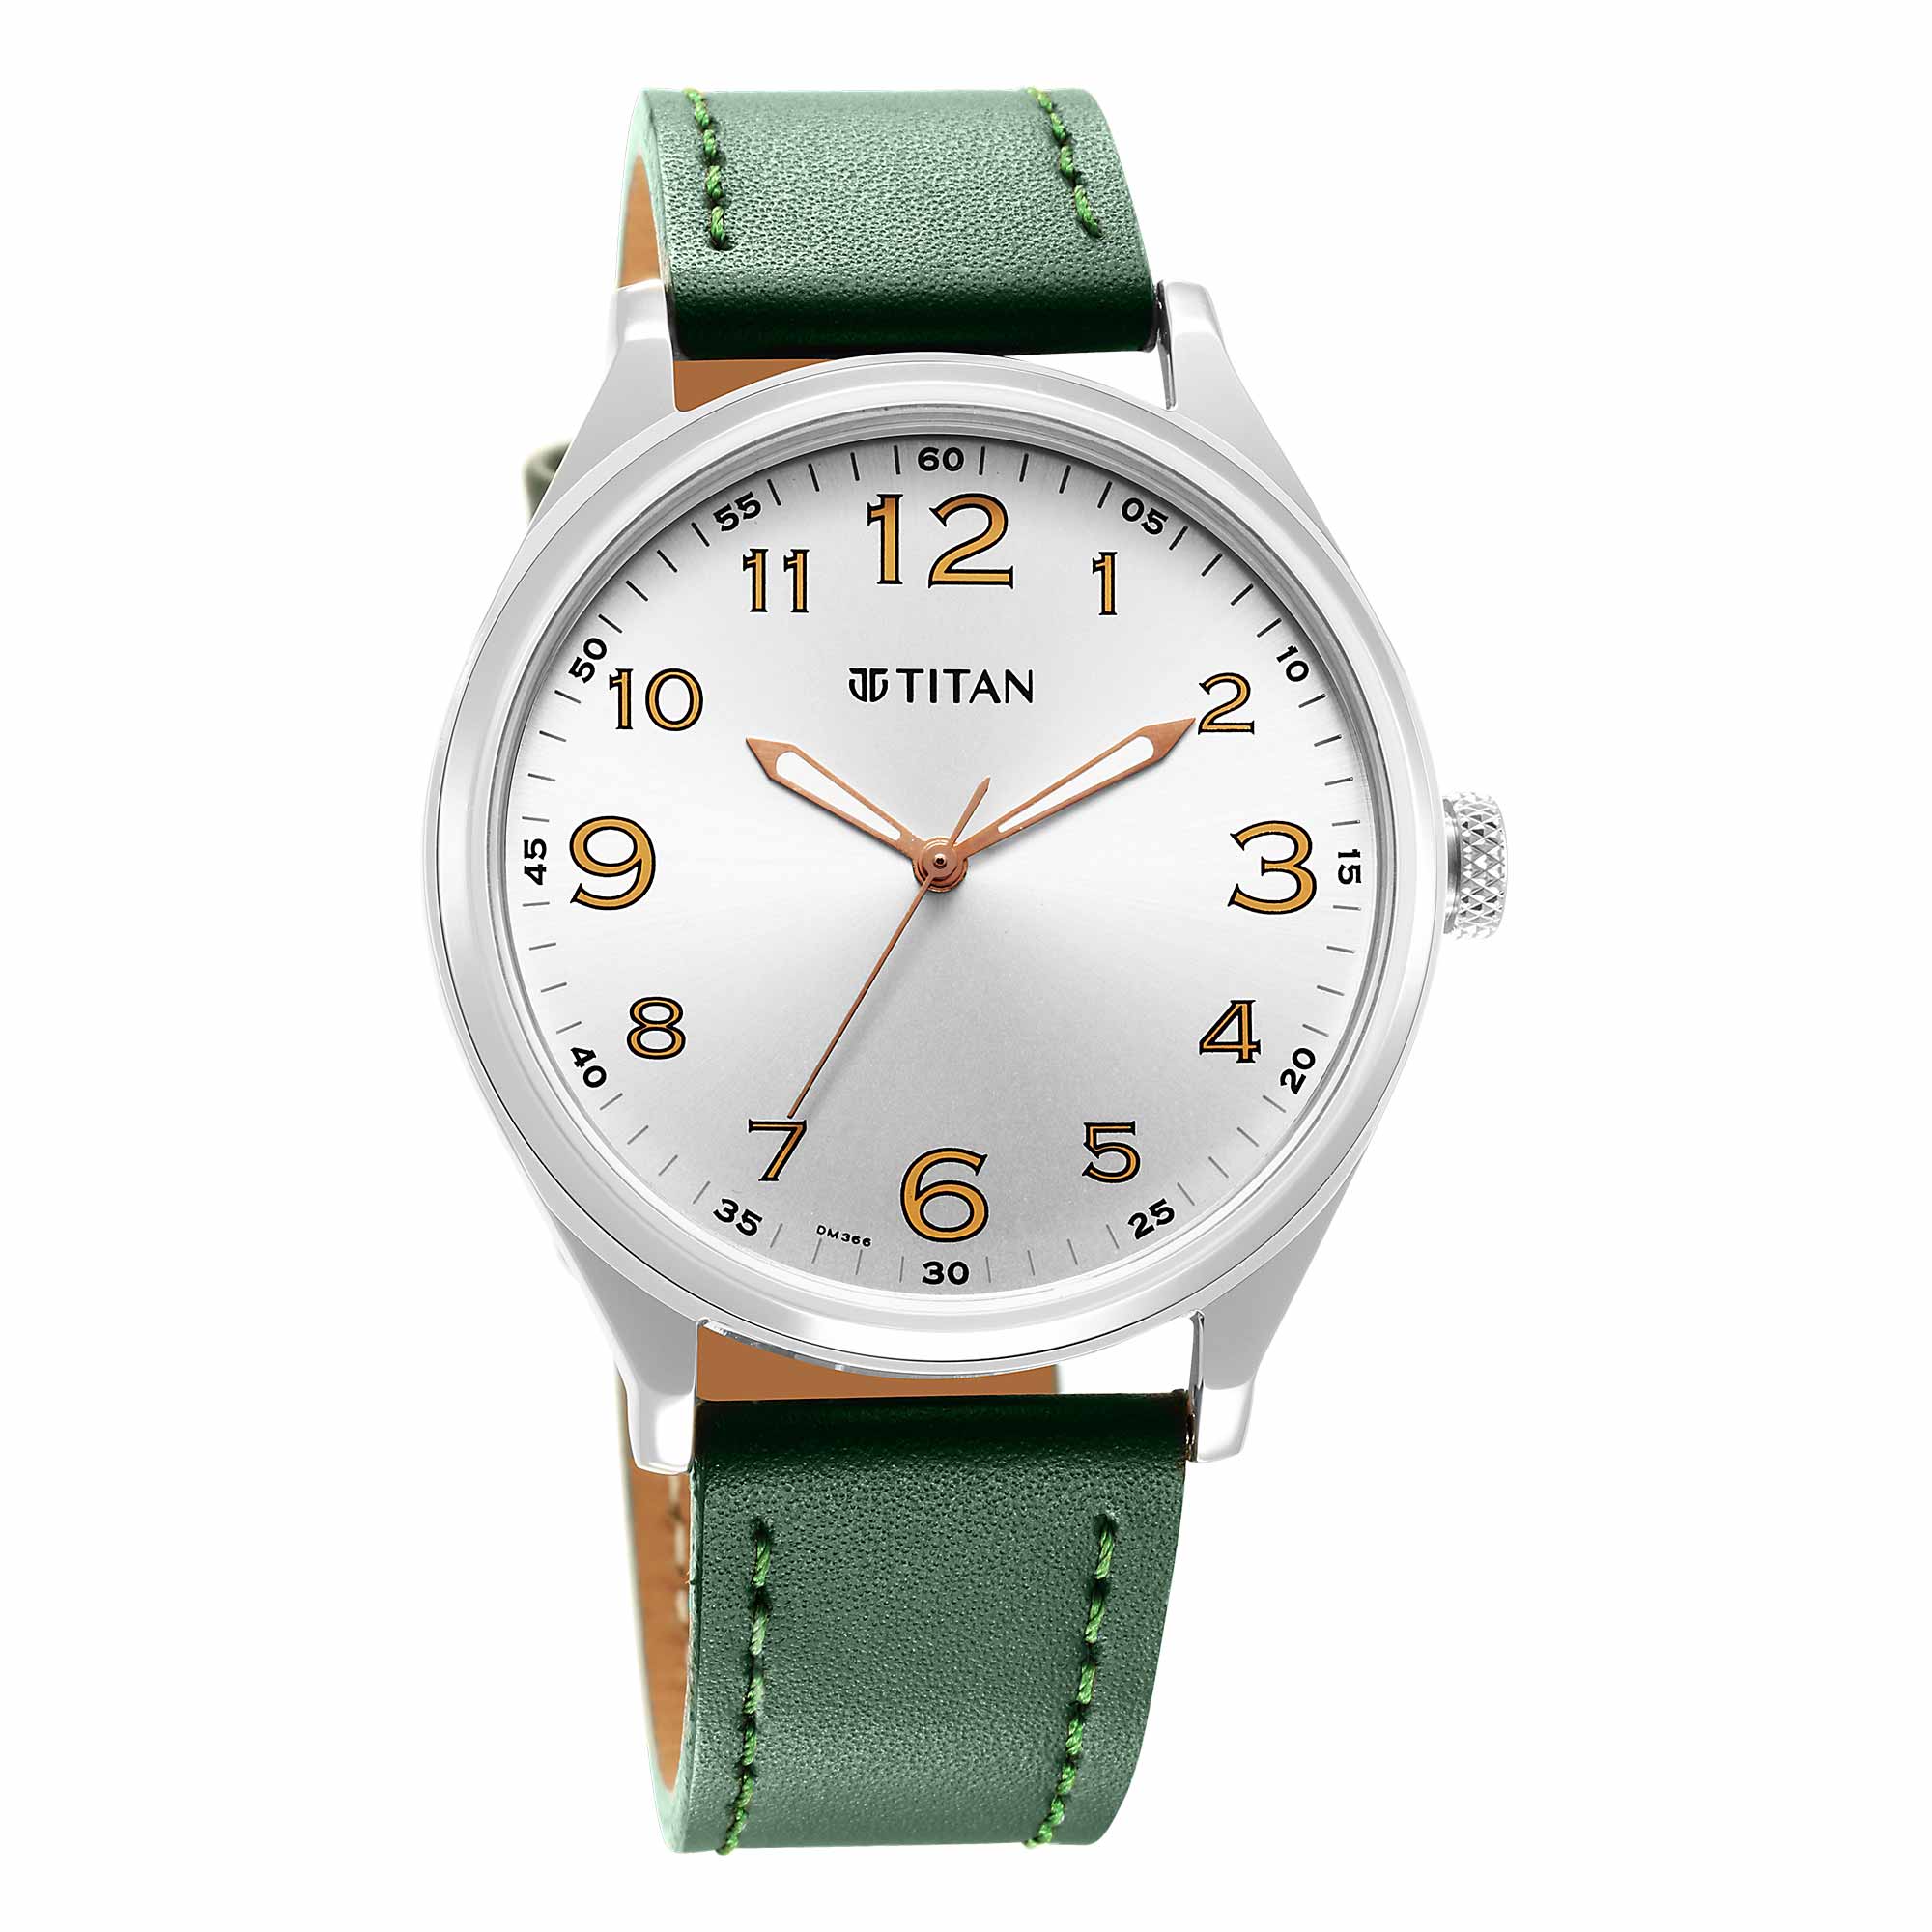 Titan Urban Analog Silver White Dial Leather Strap Watch for Men